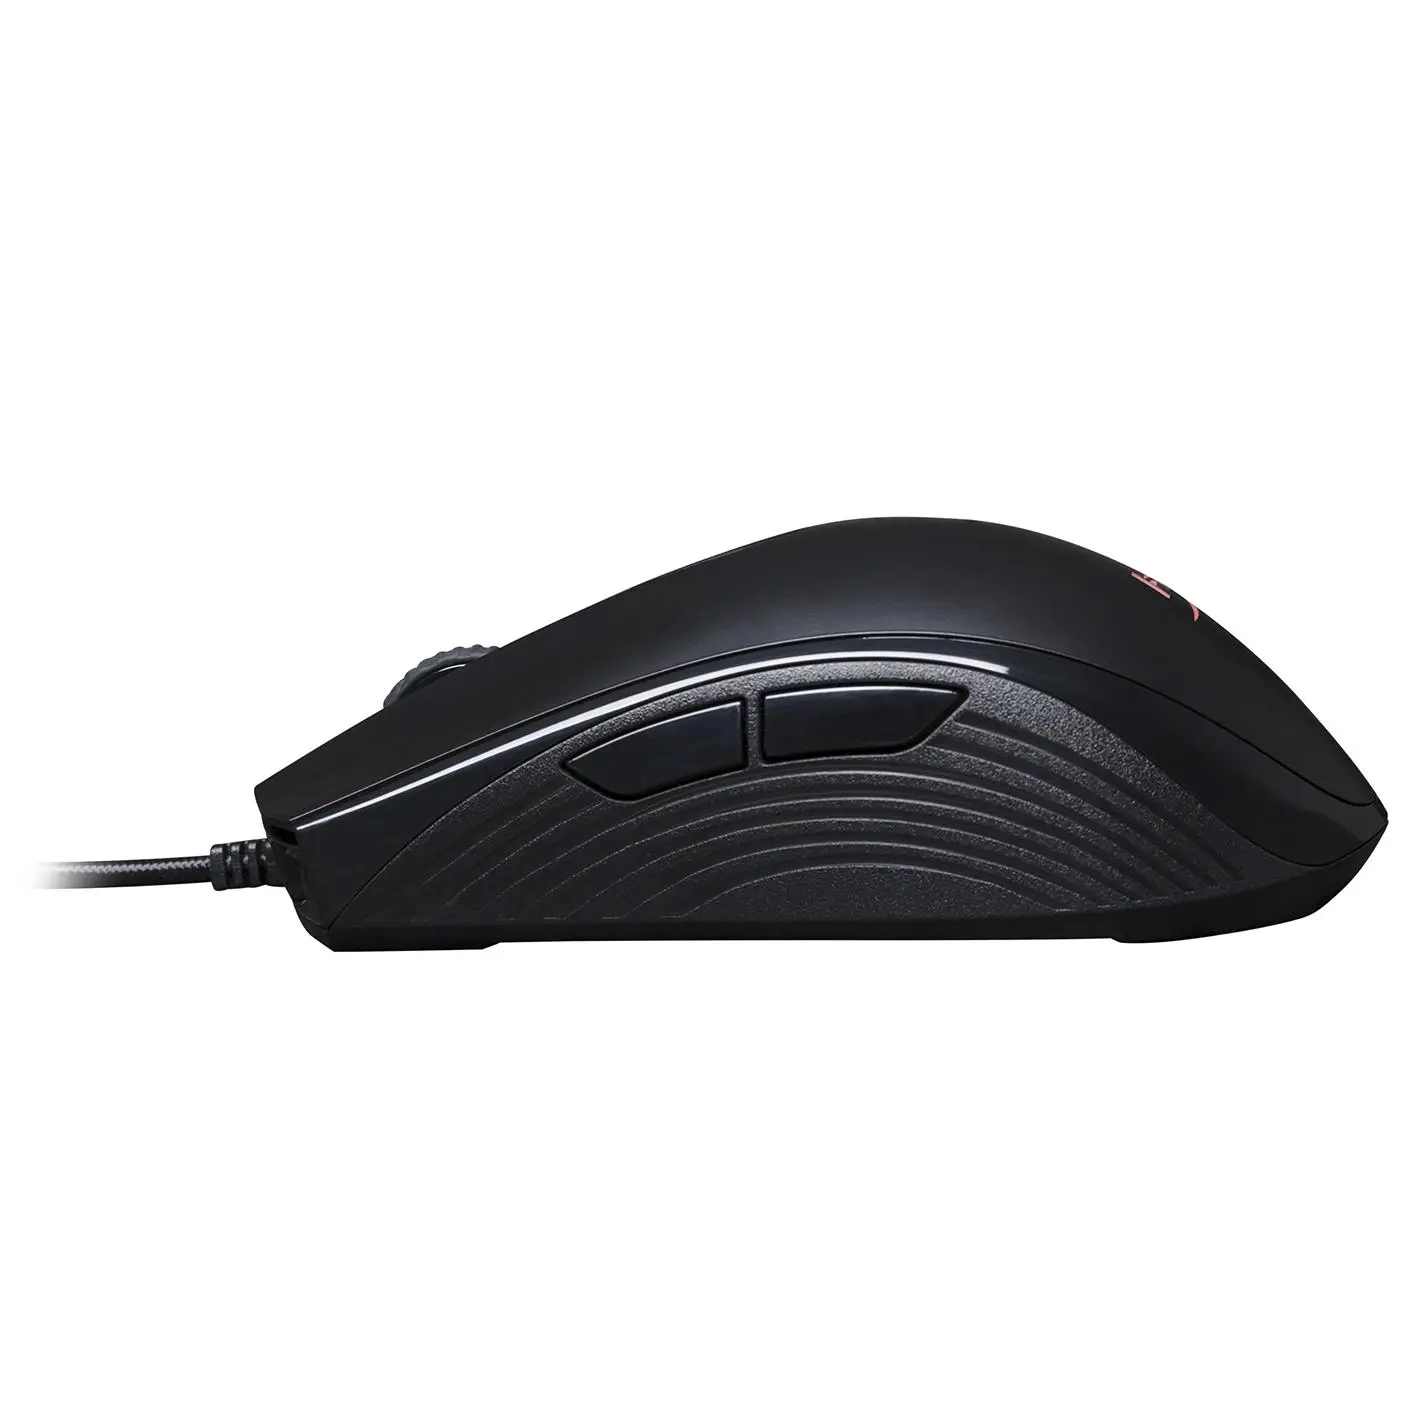 Геймърска мишка HyperX Pulsefire Core, RGB, USB, Черен - image 4